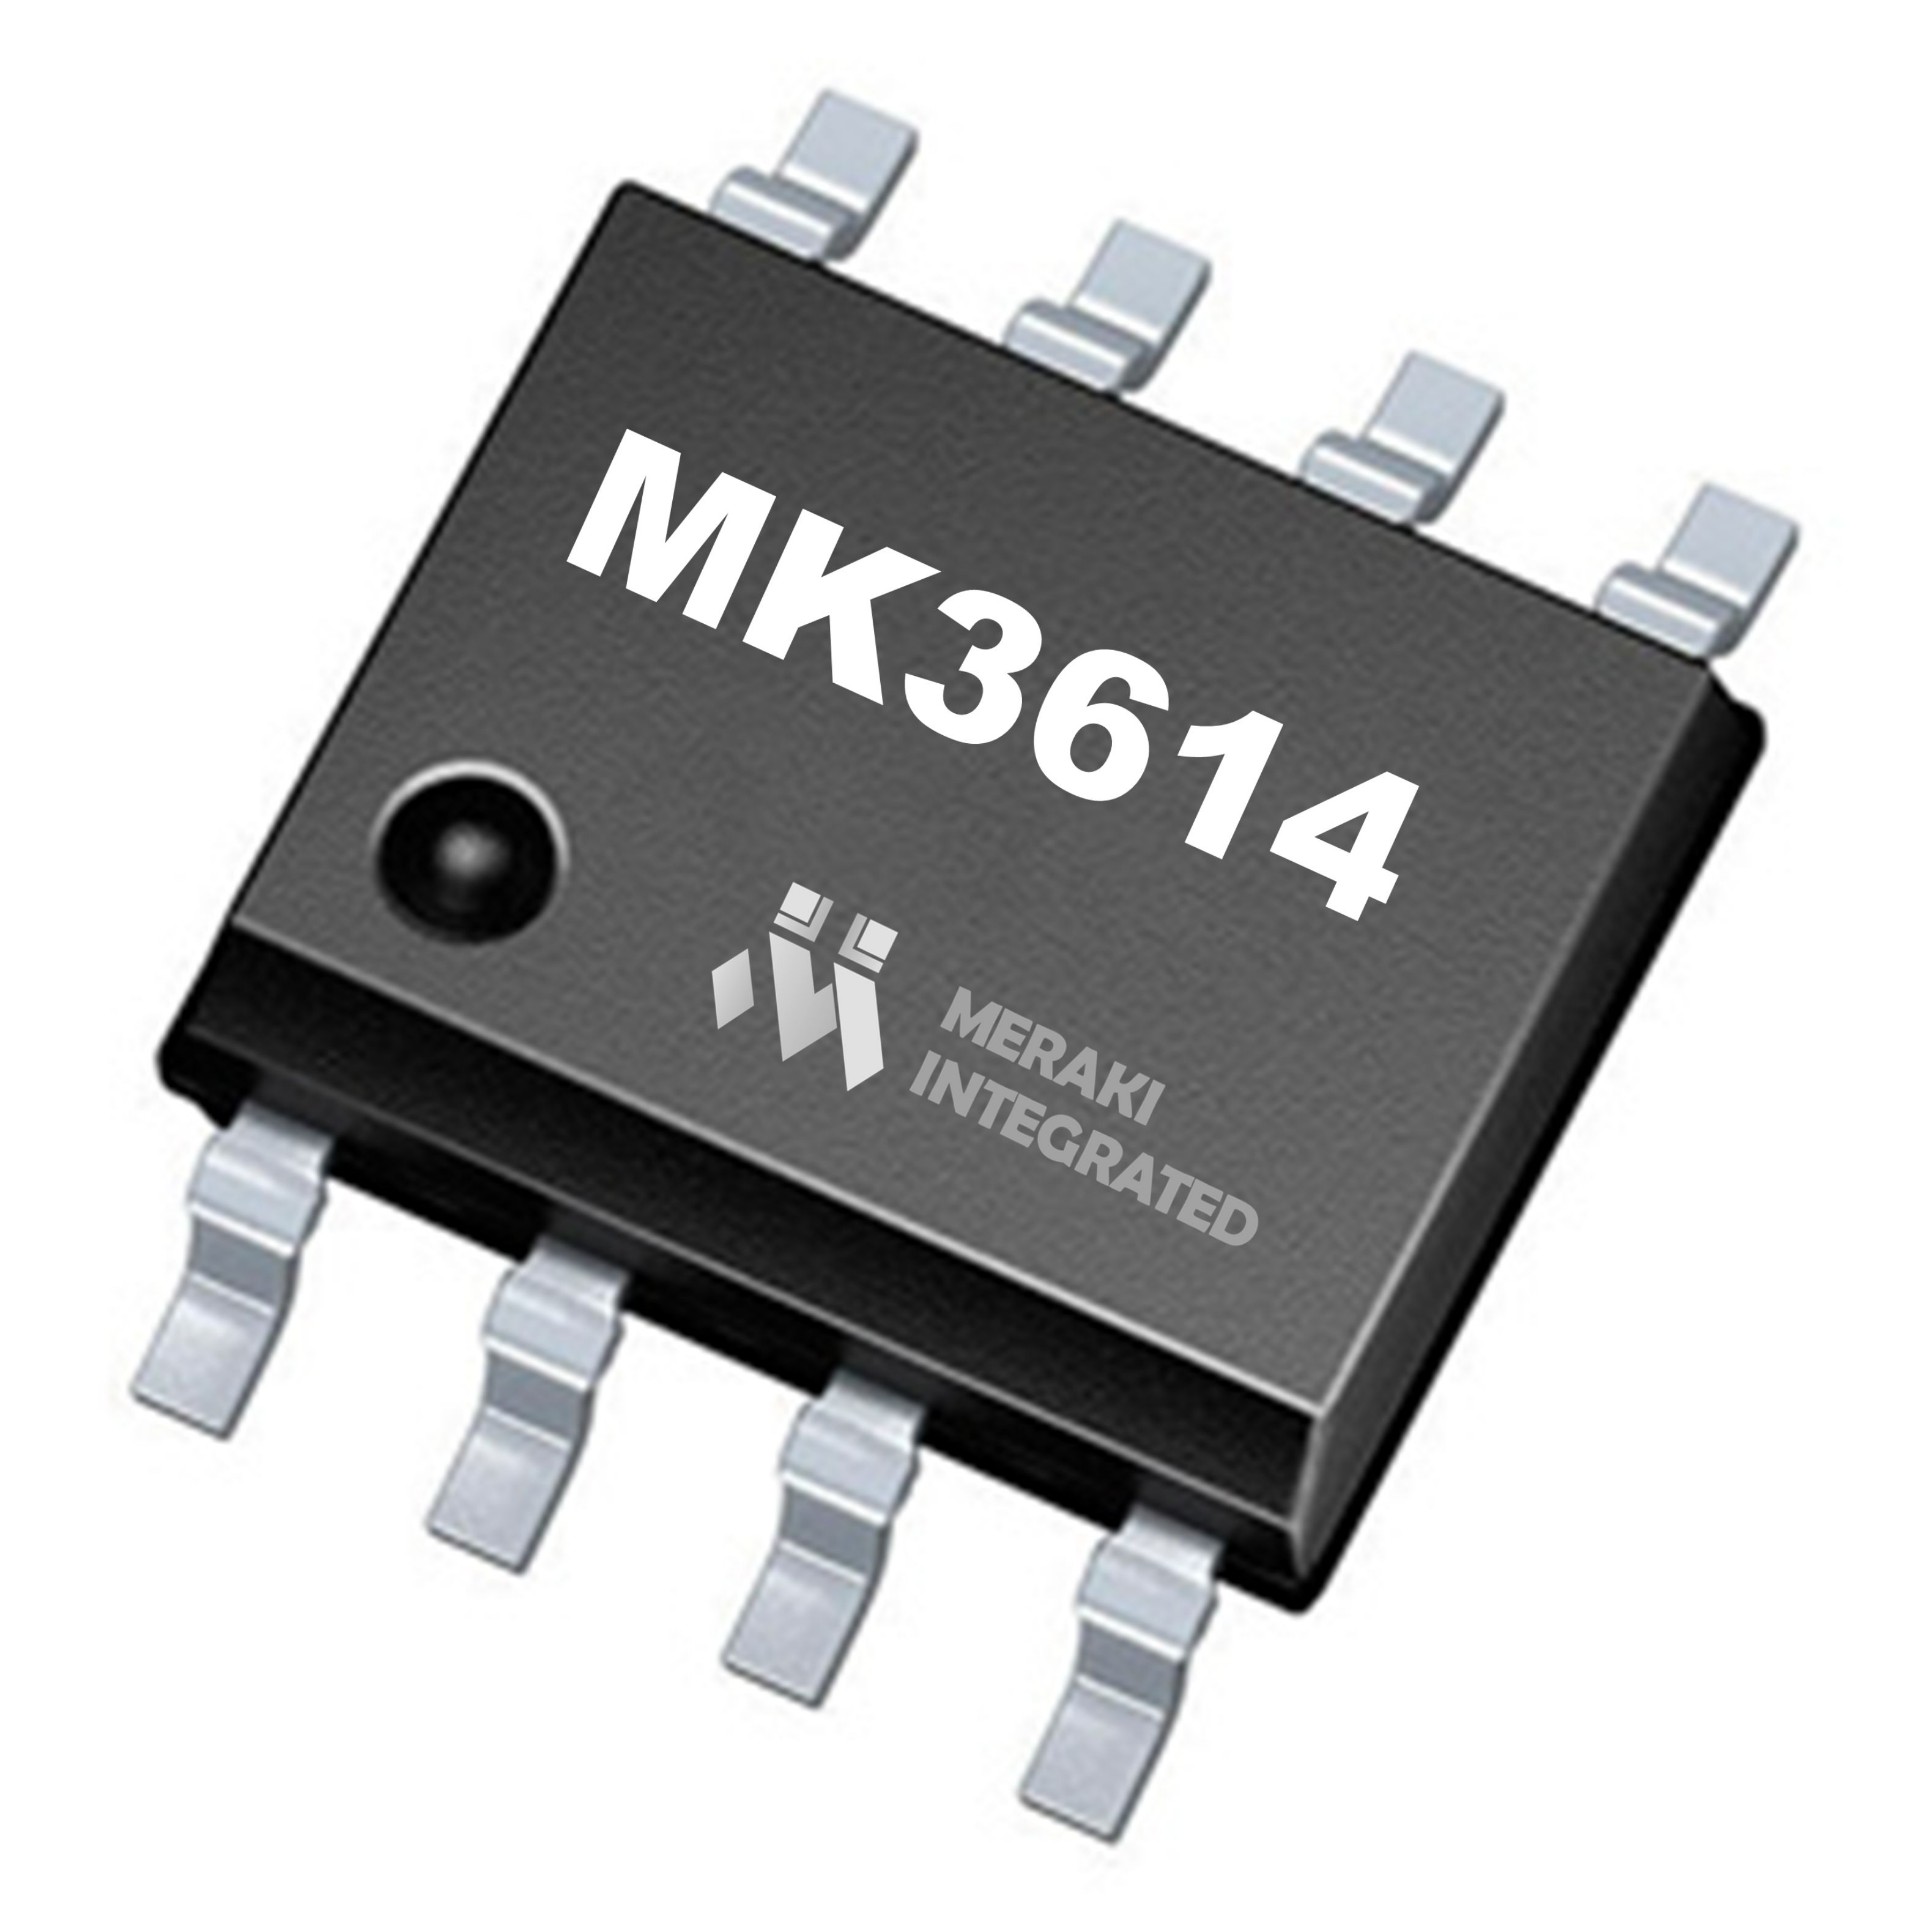 MK3614：MK3614：高密度集成的PoE供电设备控制器